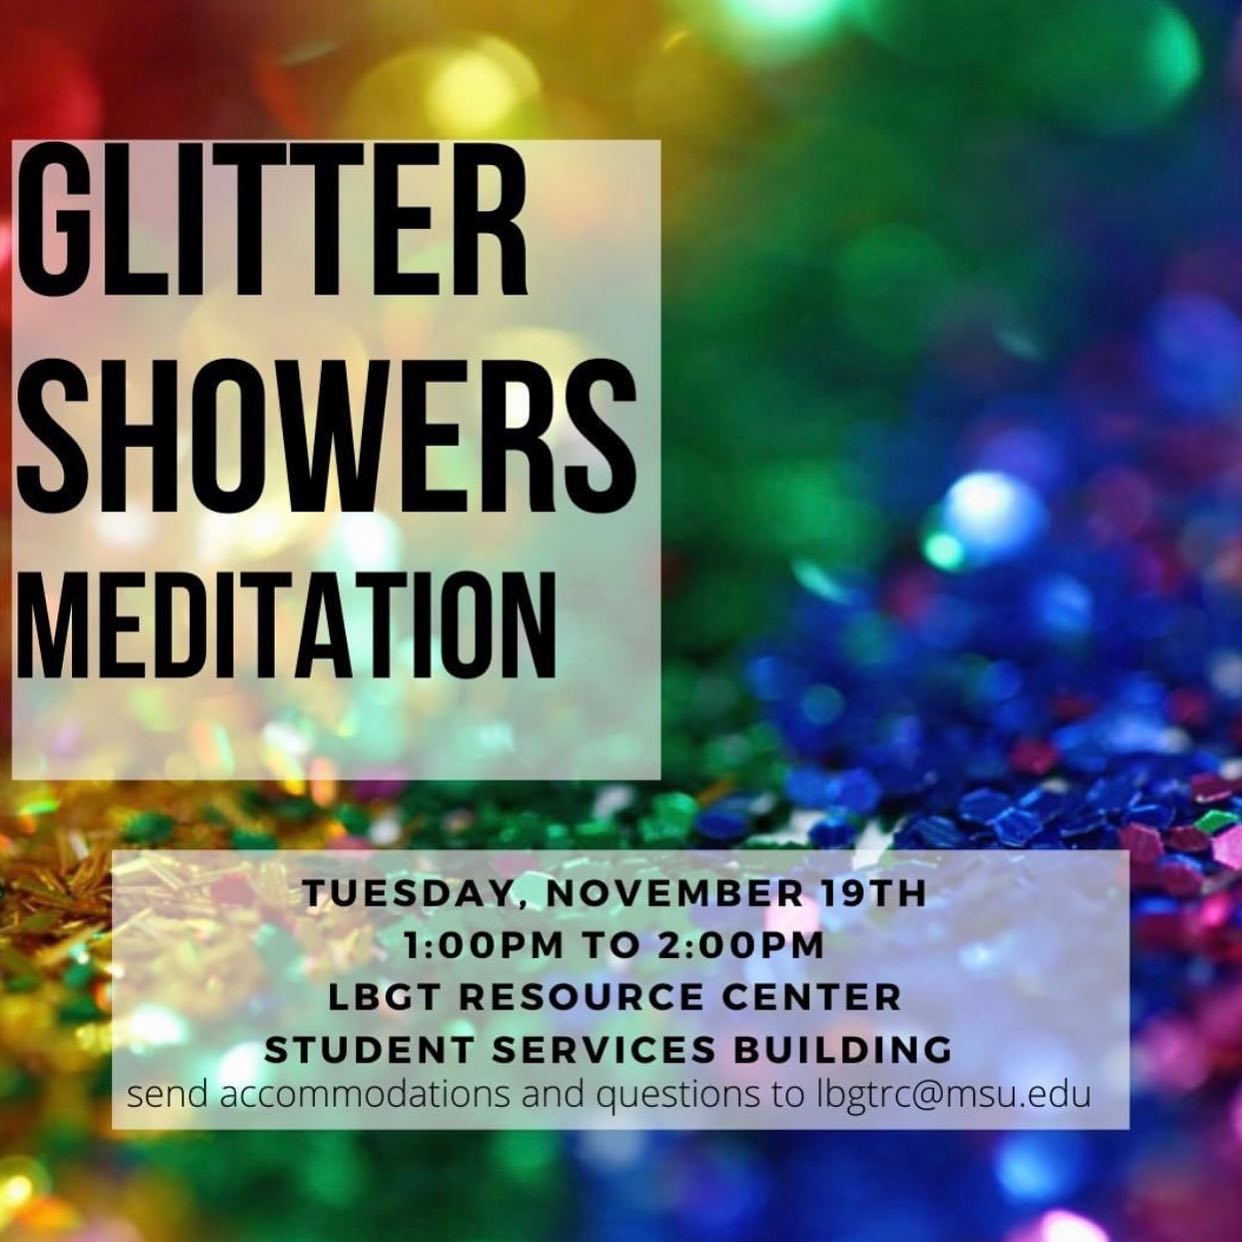 Glitter Showers Meditation